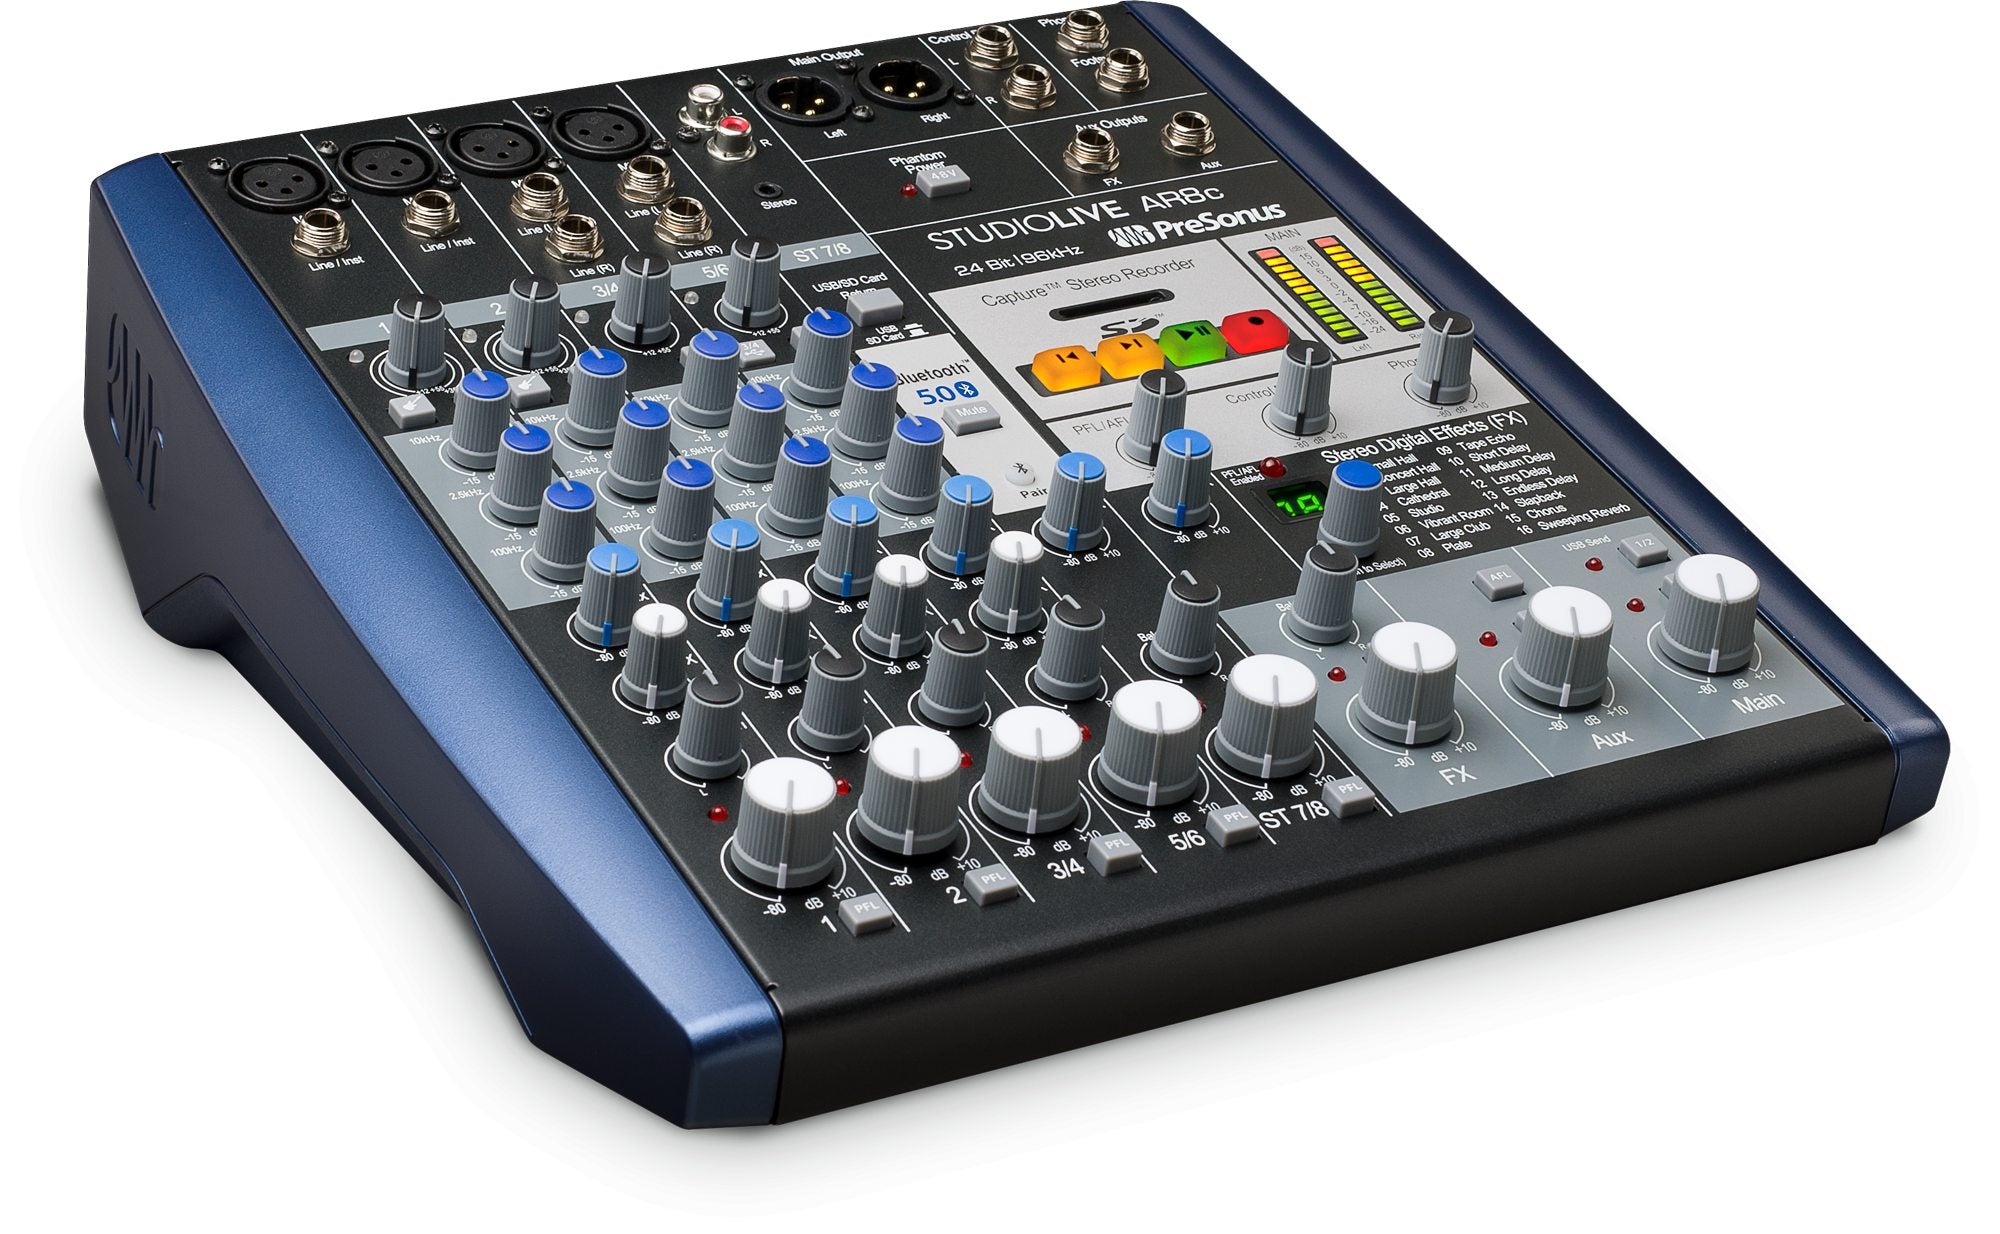 Presonus AR8c Audio Mixer with bluetooth for Stage, Studio & Podcasting